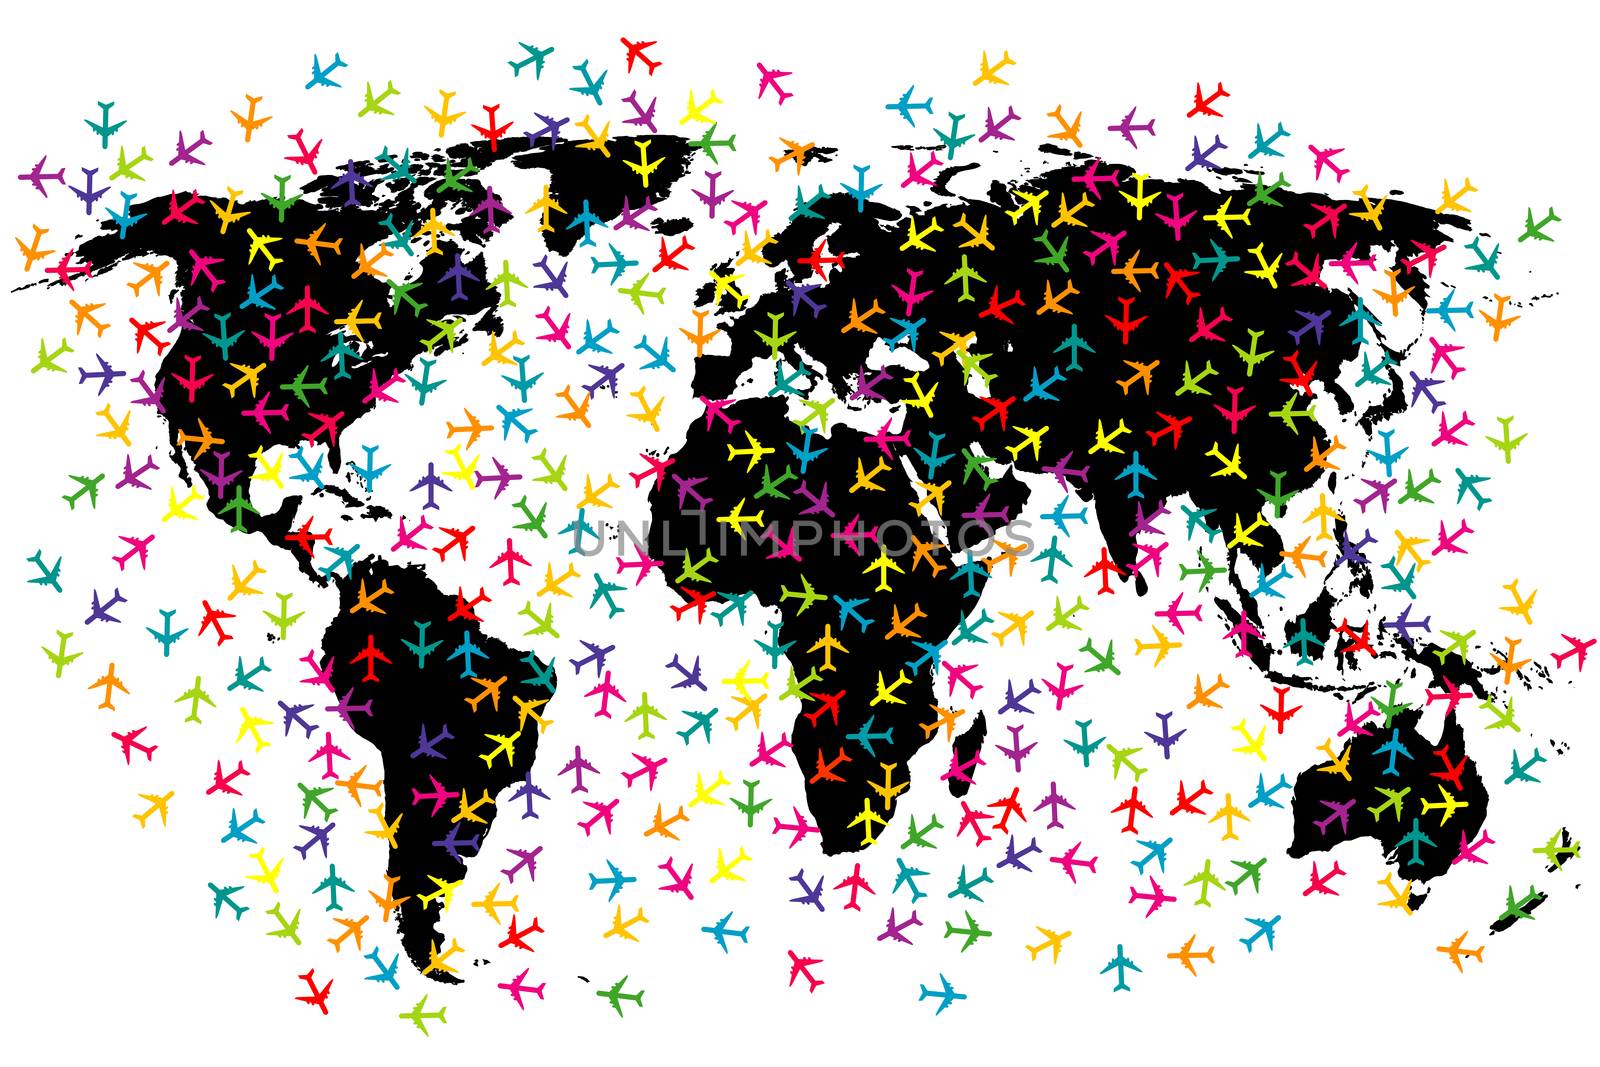 World map airline flights by hibrida13